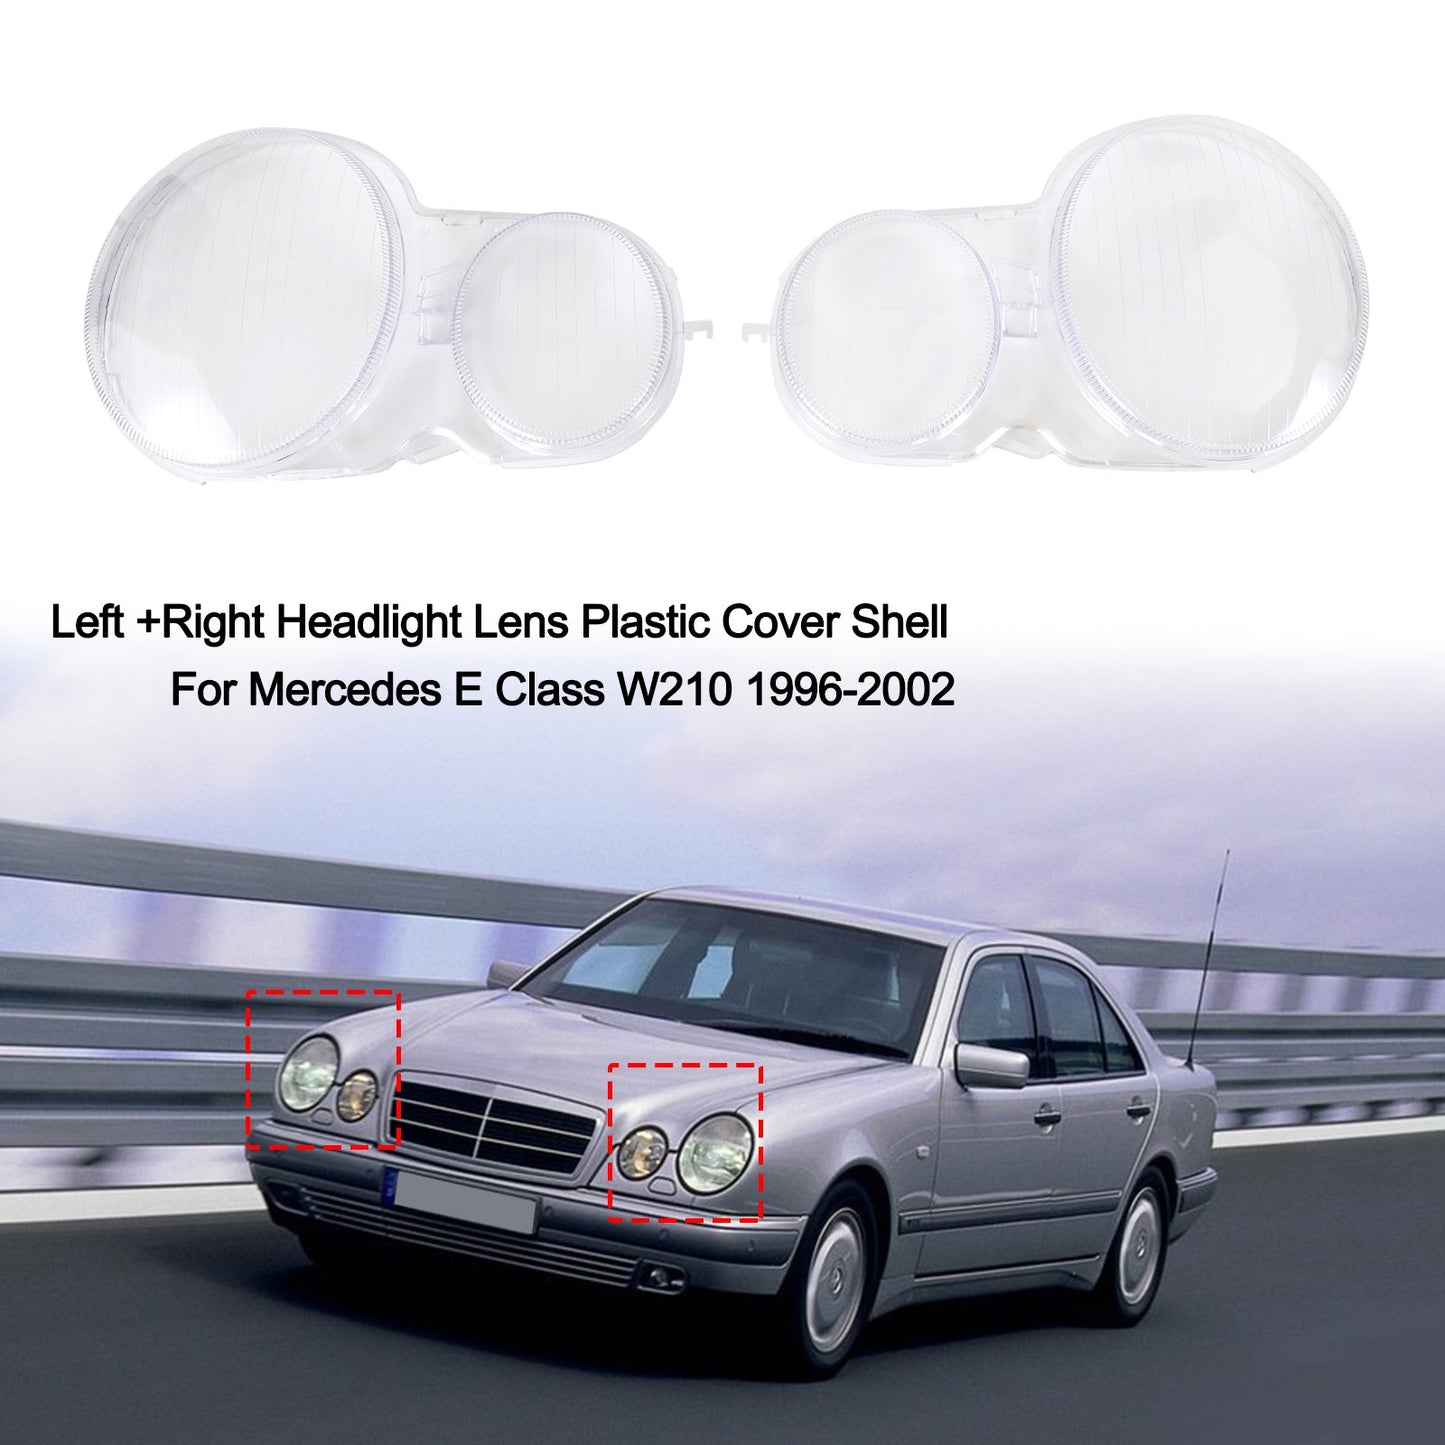 Left +Right Headlight Lens Plastic Cover Shell For Mercedes E Class W210 96-2002